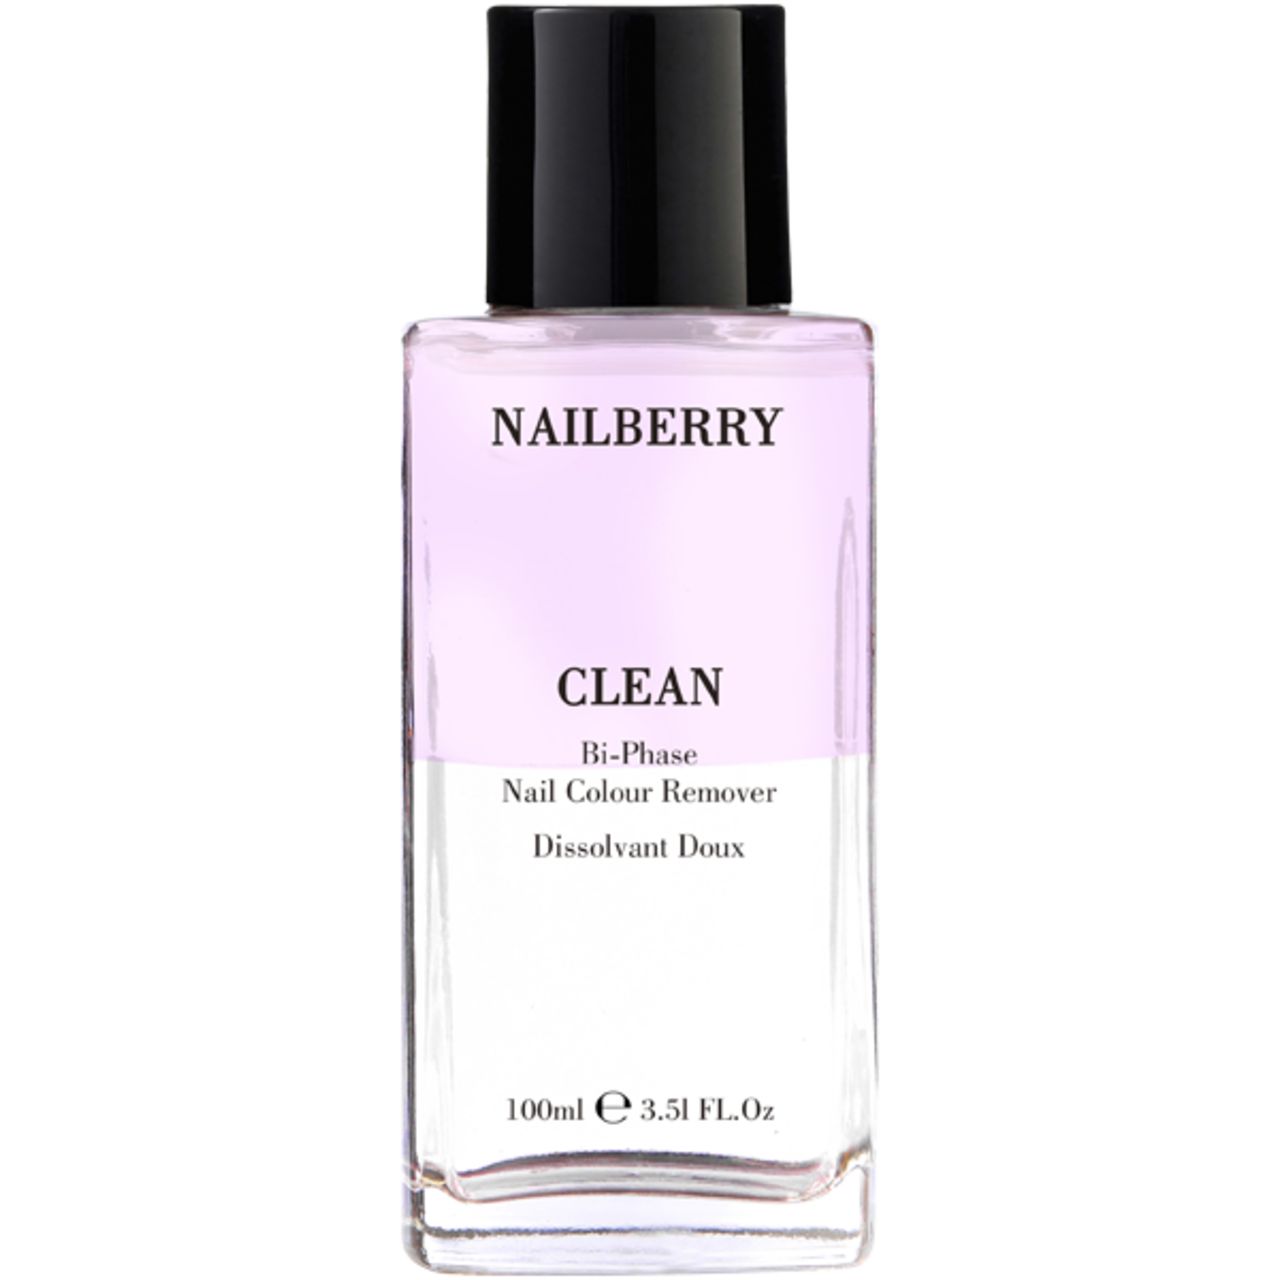 Nailberry, Nail Polish Remover acetone free